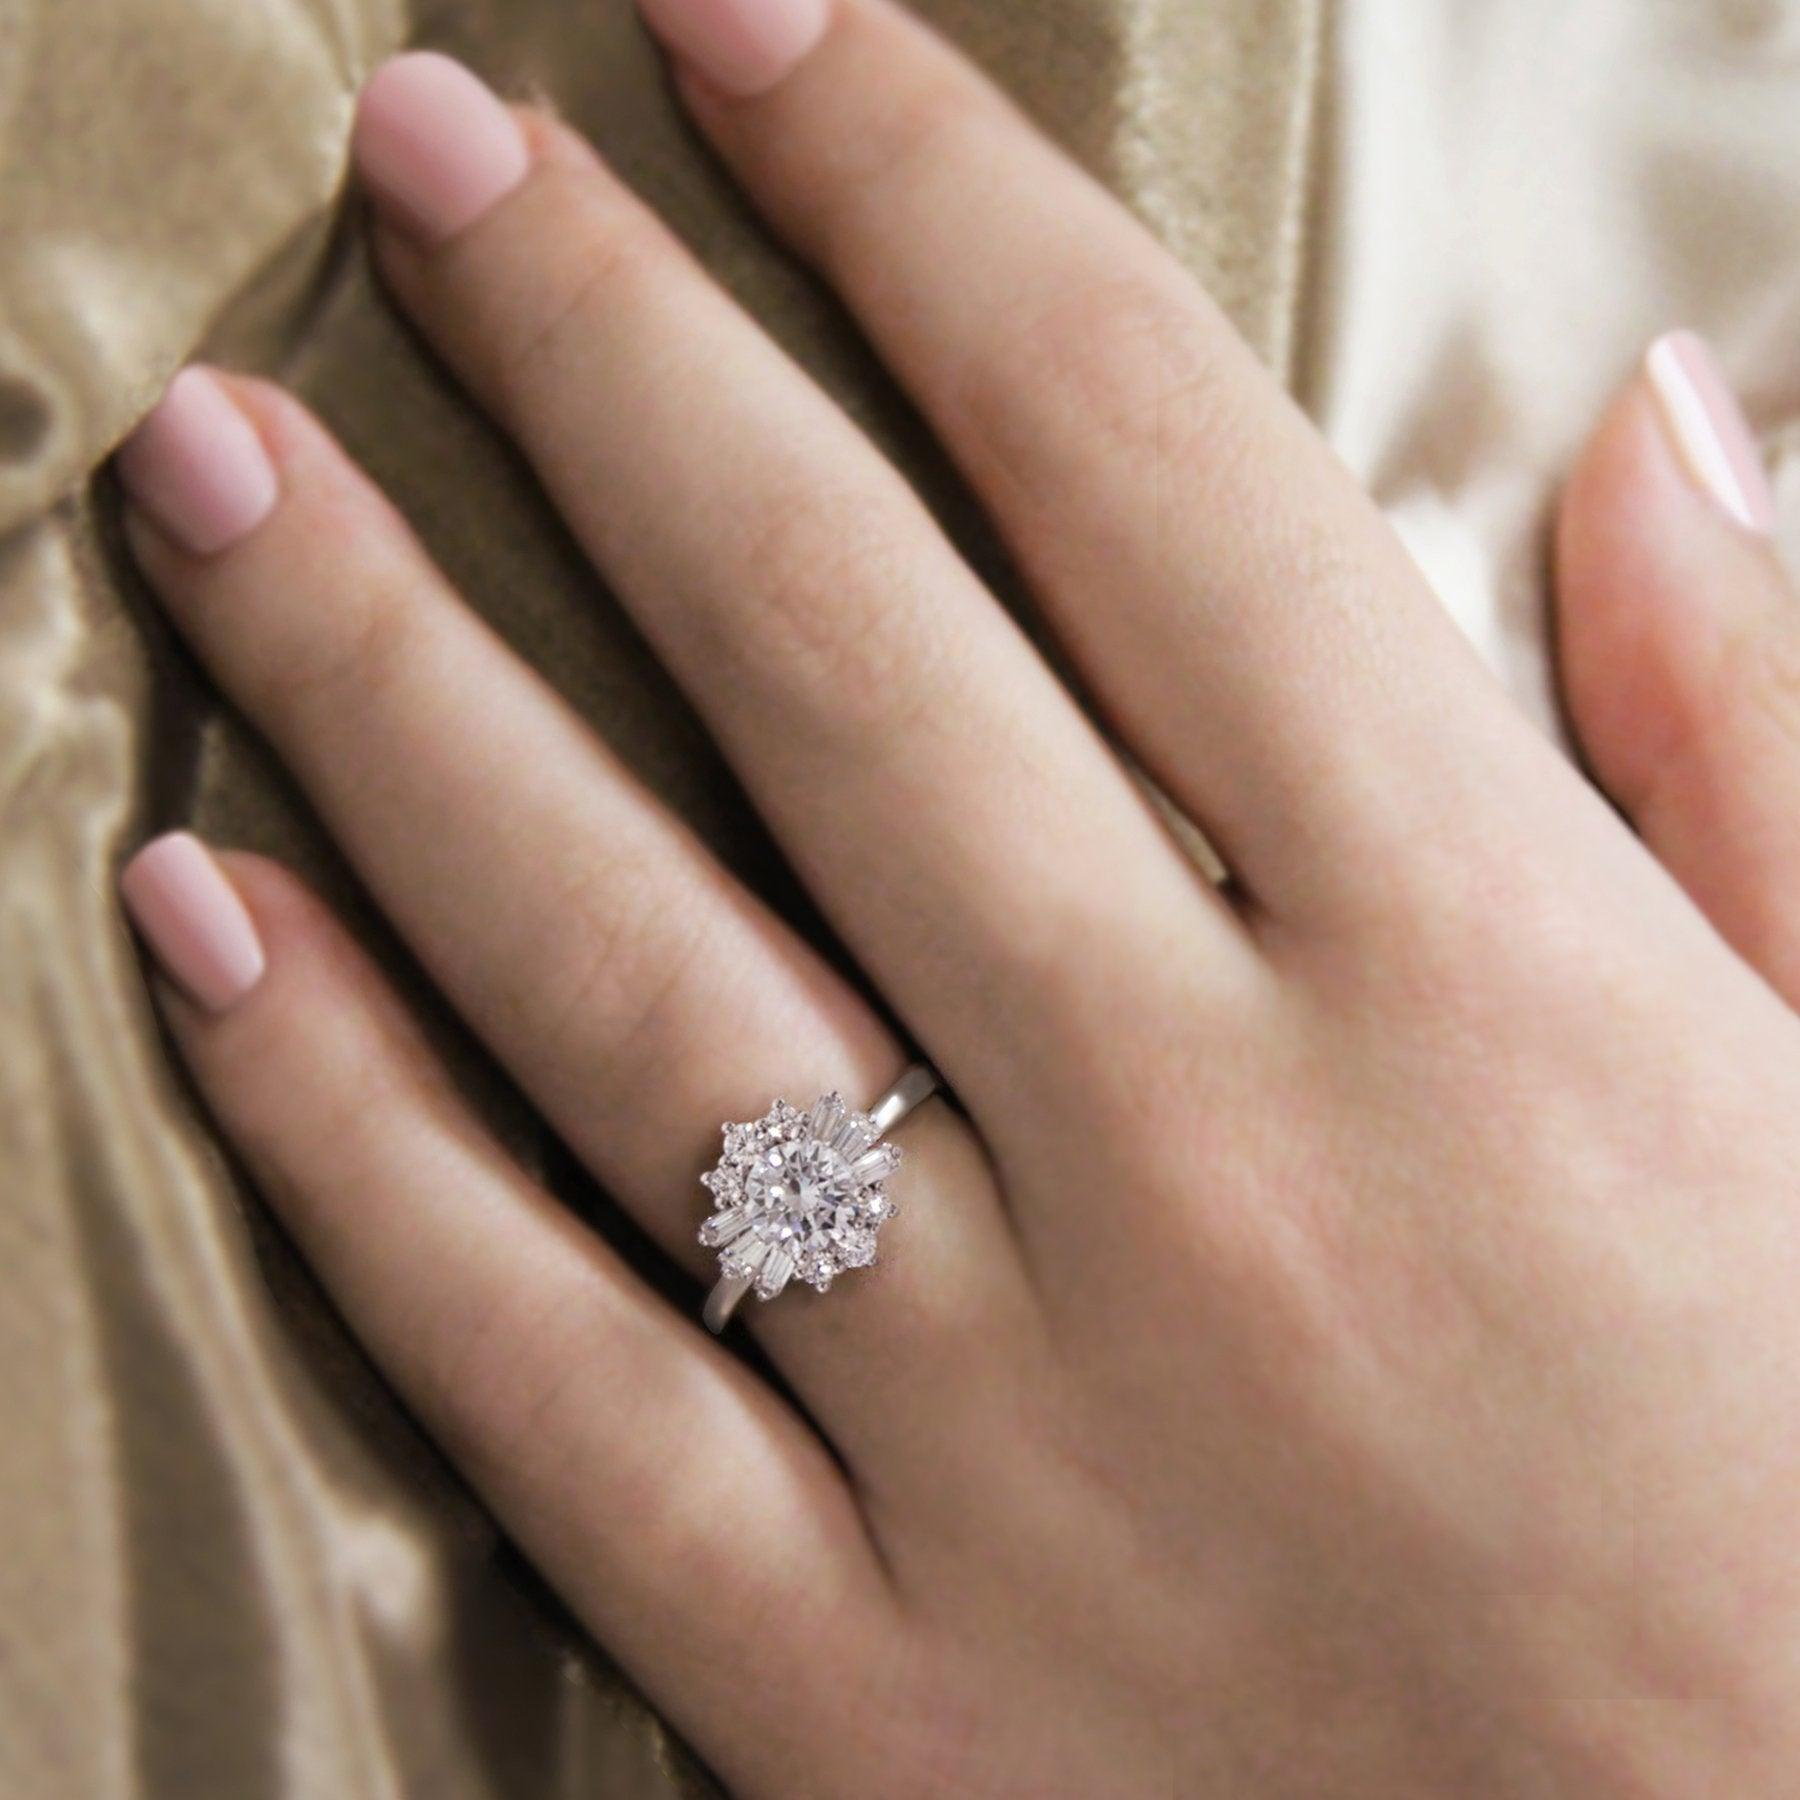 BW JAMES Engagement Rings "The Samara" The Halo Semi-Mount Diamond Ring